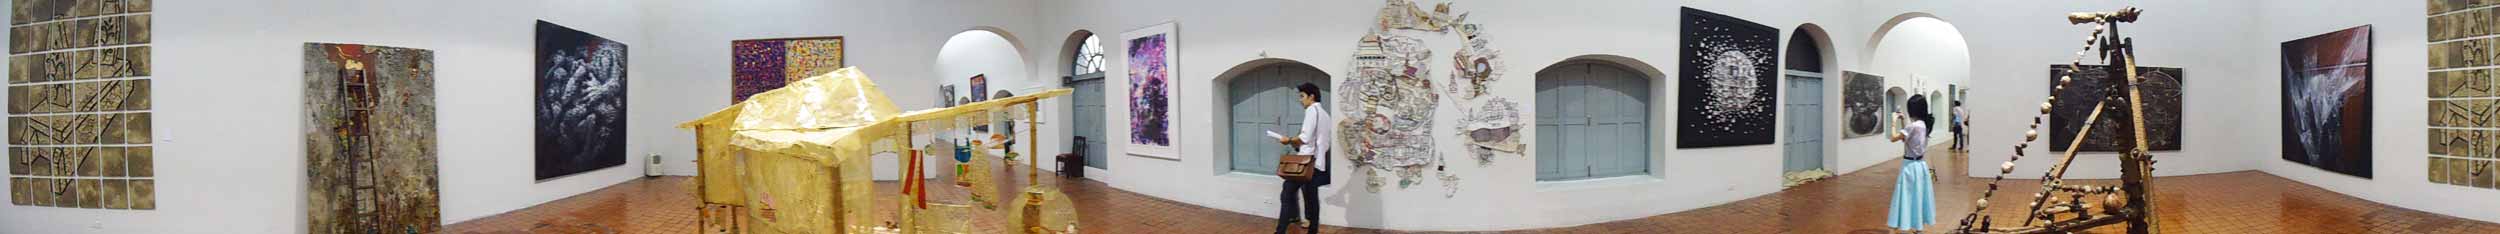 The 58th National Exhibition of Art การแสดงศิลปกรรมแห่งชาติ ครั้งที่ 58